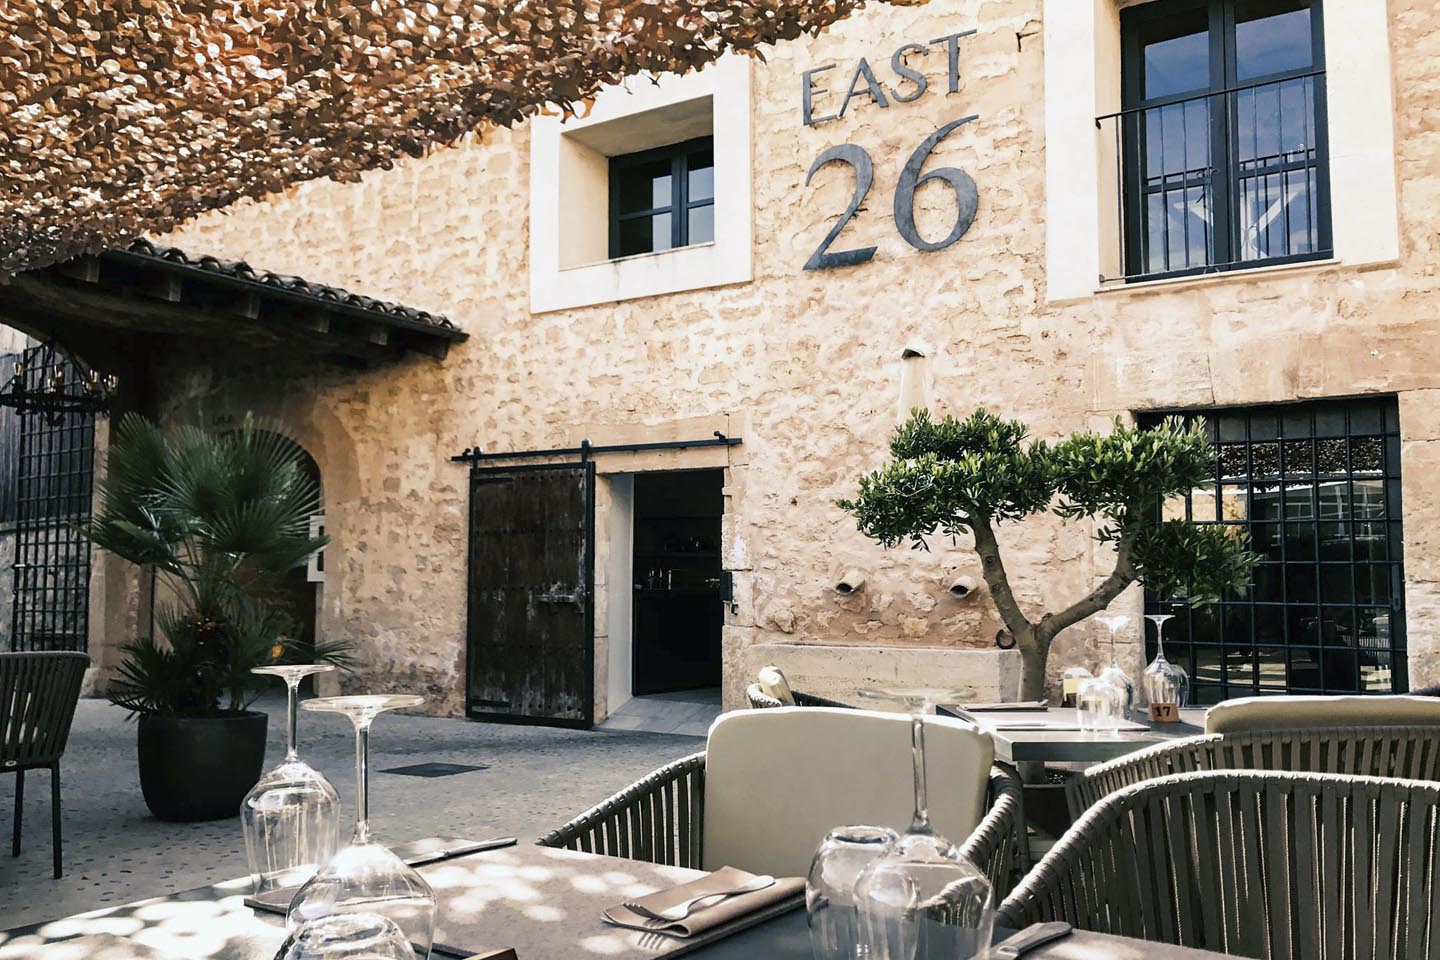 FEATURED best restaurants south east mallorca hotel can bonico ses salines mejores restaurantes terraza sureste mallorca